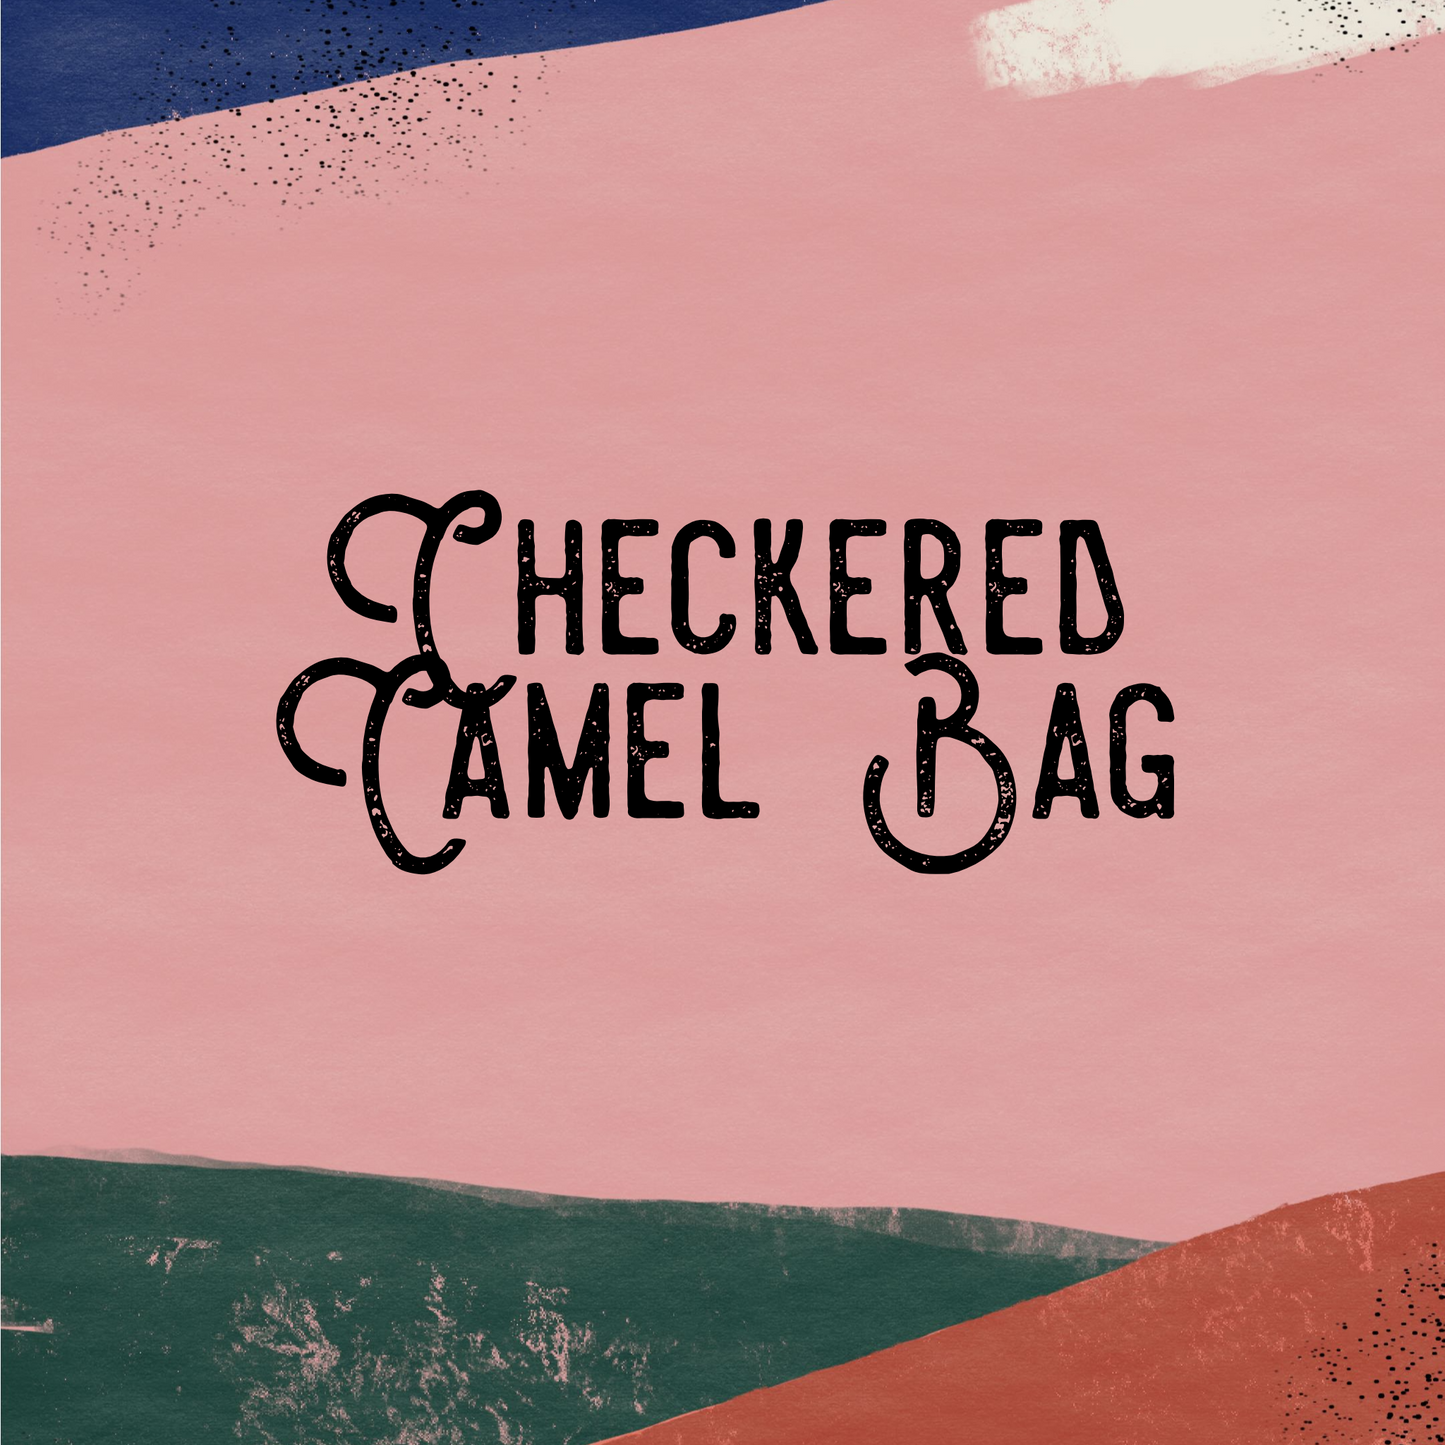 Checkered Camel Bag